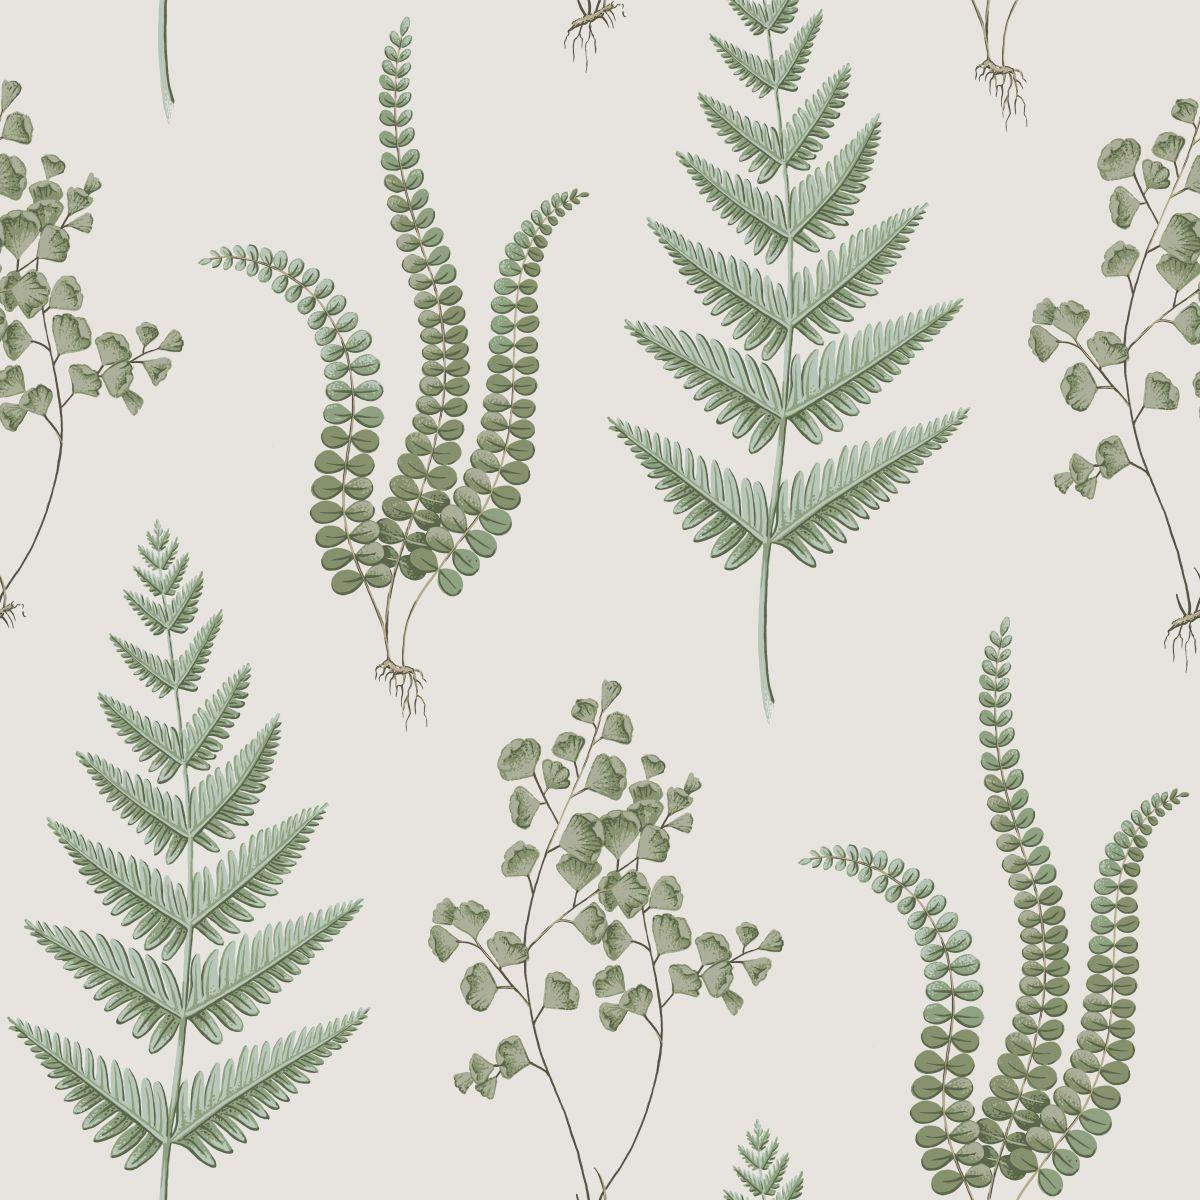 Fern wallpaper. Flowered and botanical wallpaper